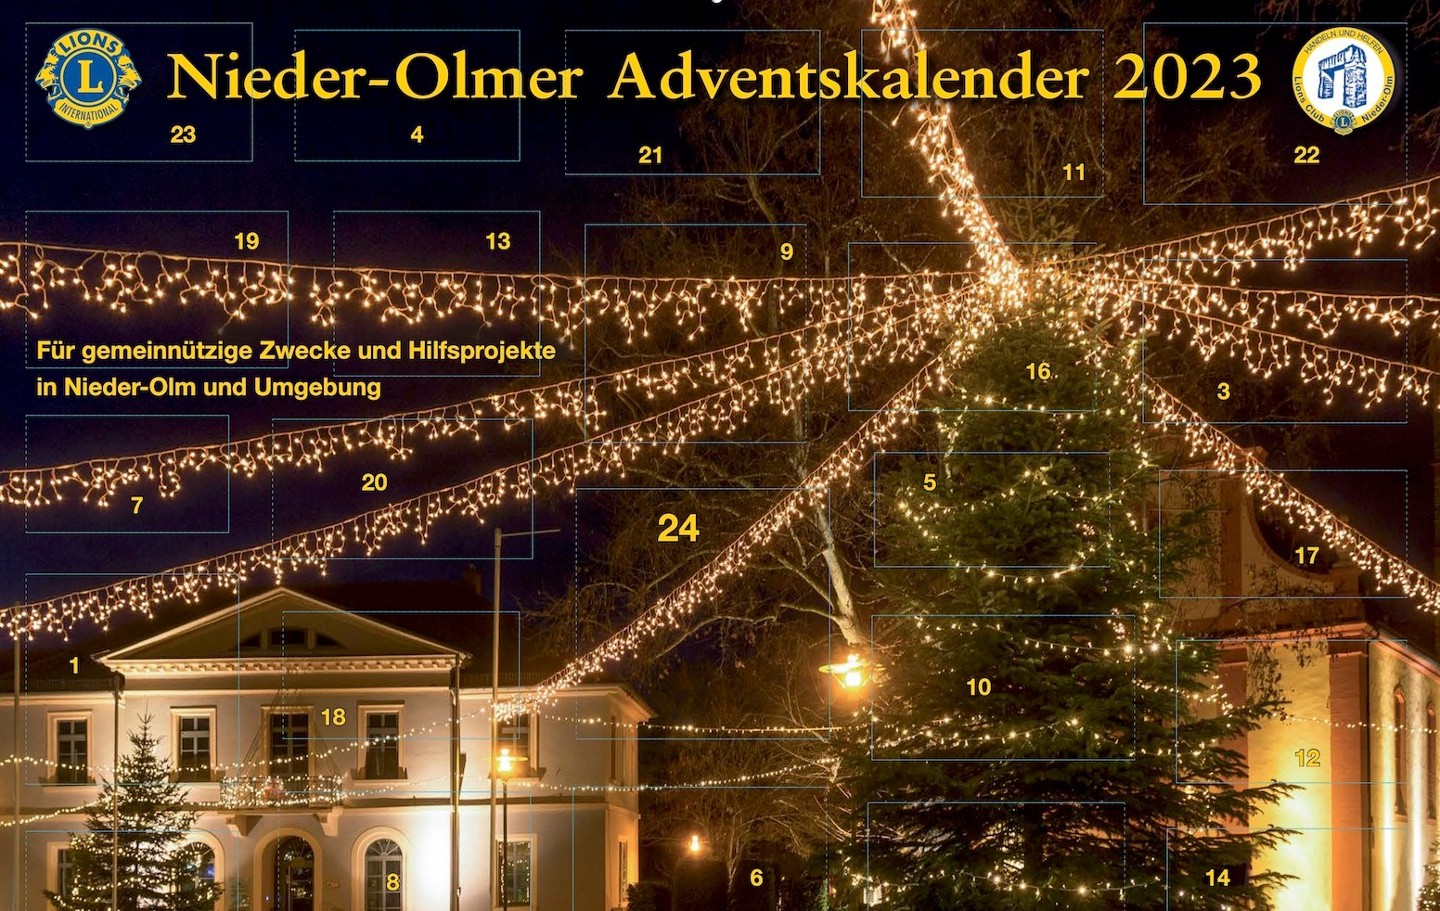 „Nieder-Olmer Adventskalender 2023“ - Wir sagen Danke!!!